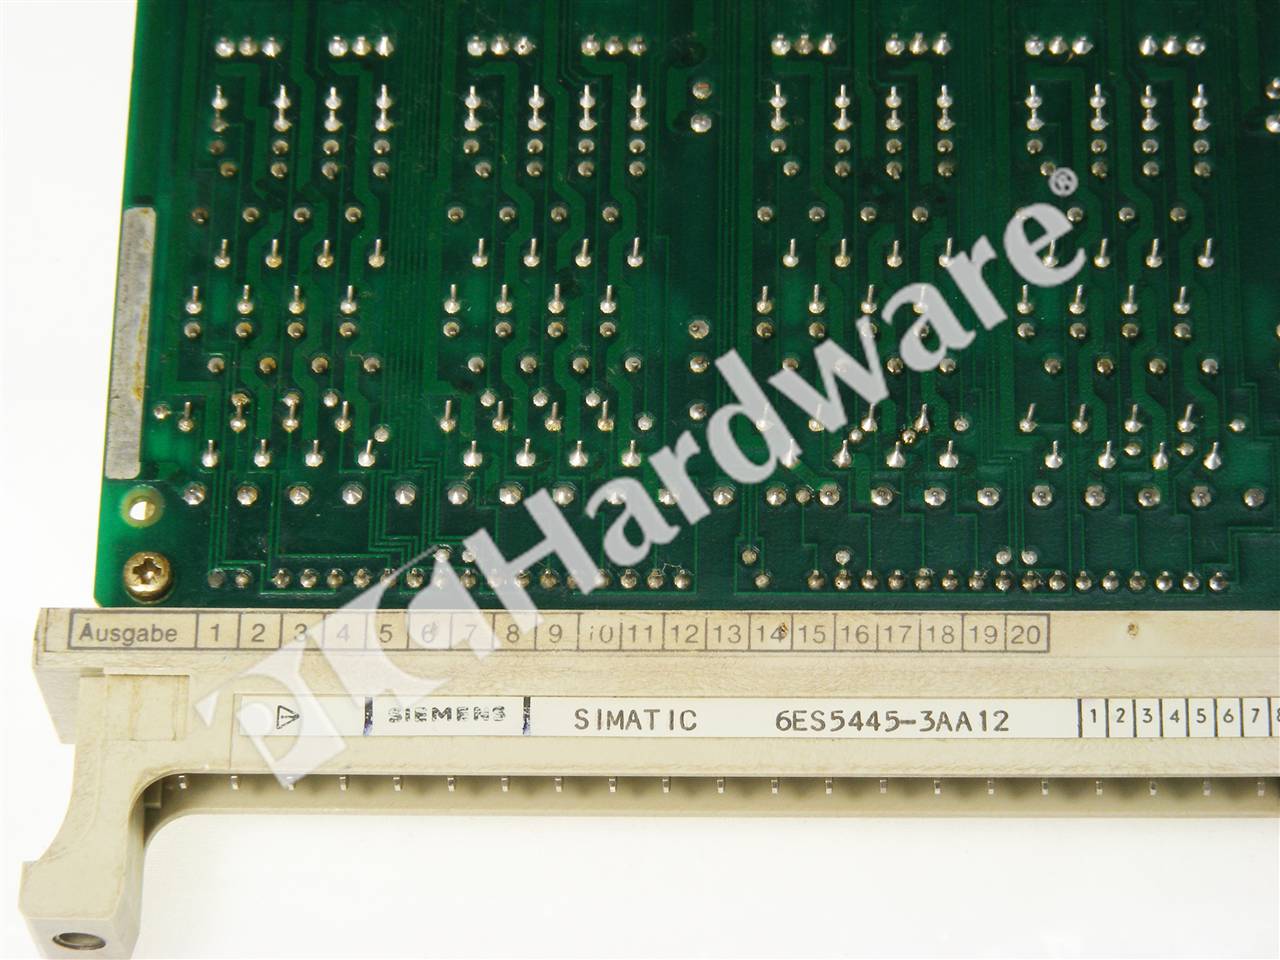 PLC Hardware - Siemens 6ES5445-3AA12, Surplus Open Pre-owned